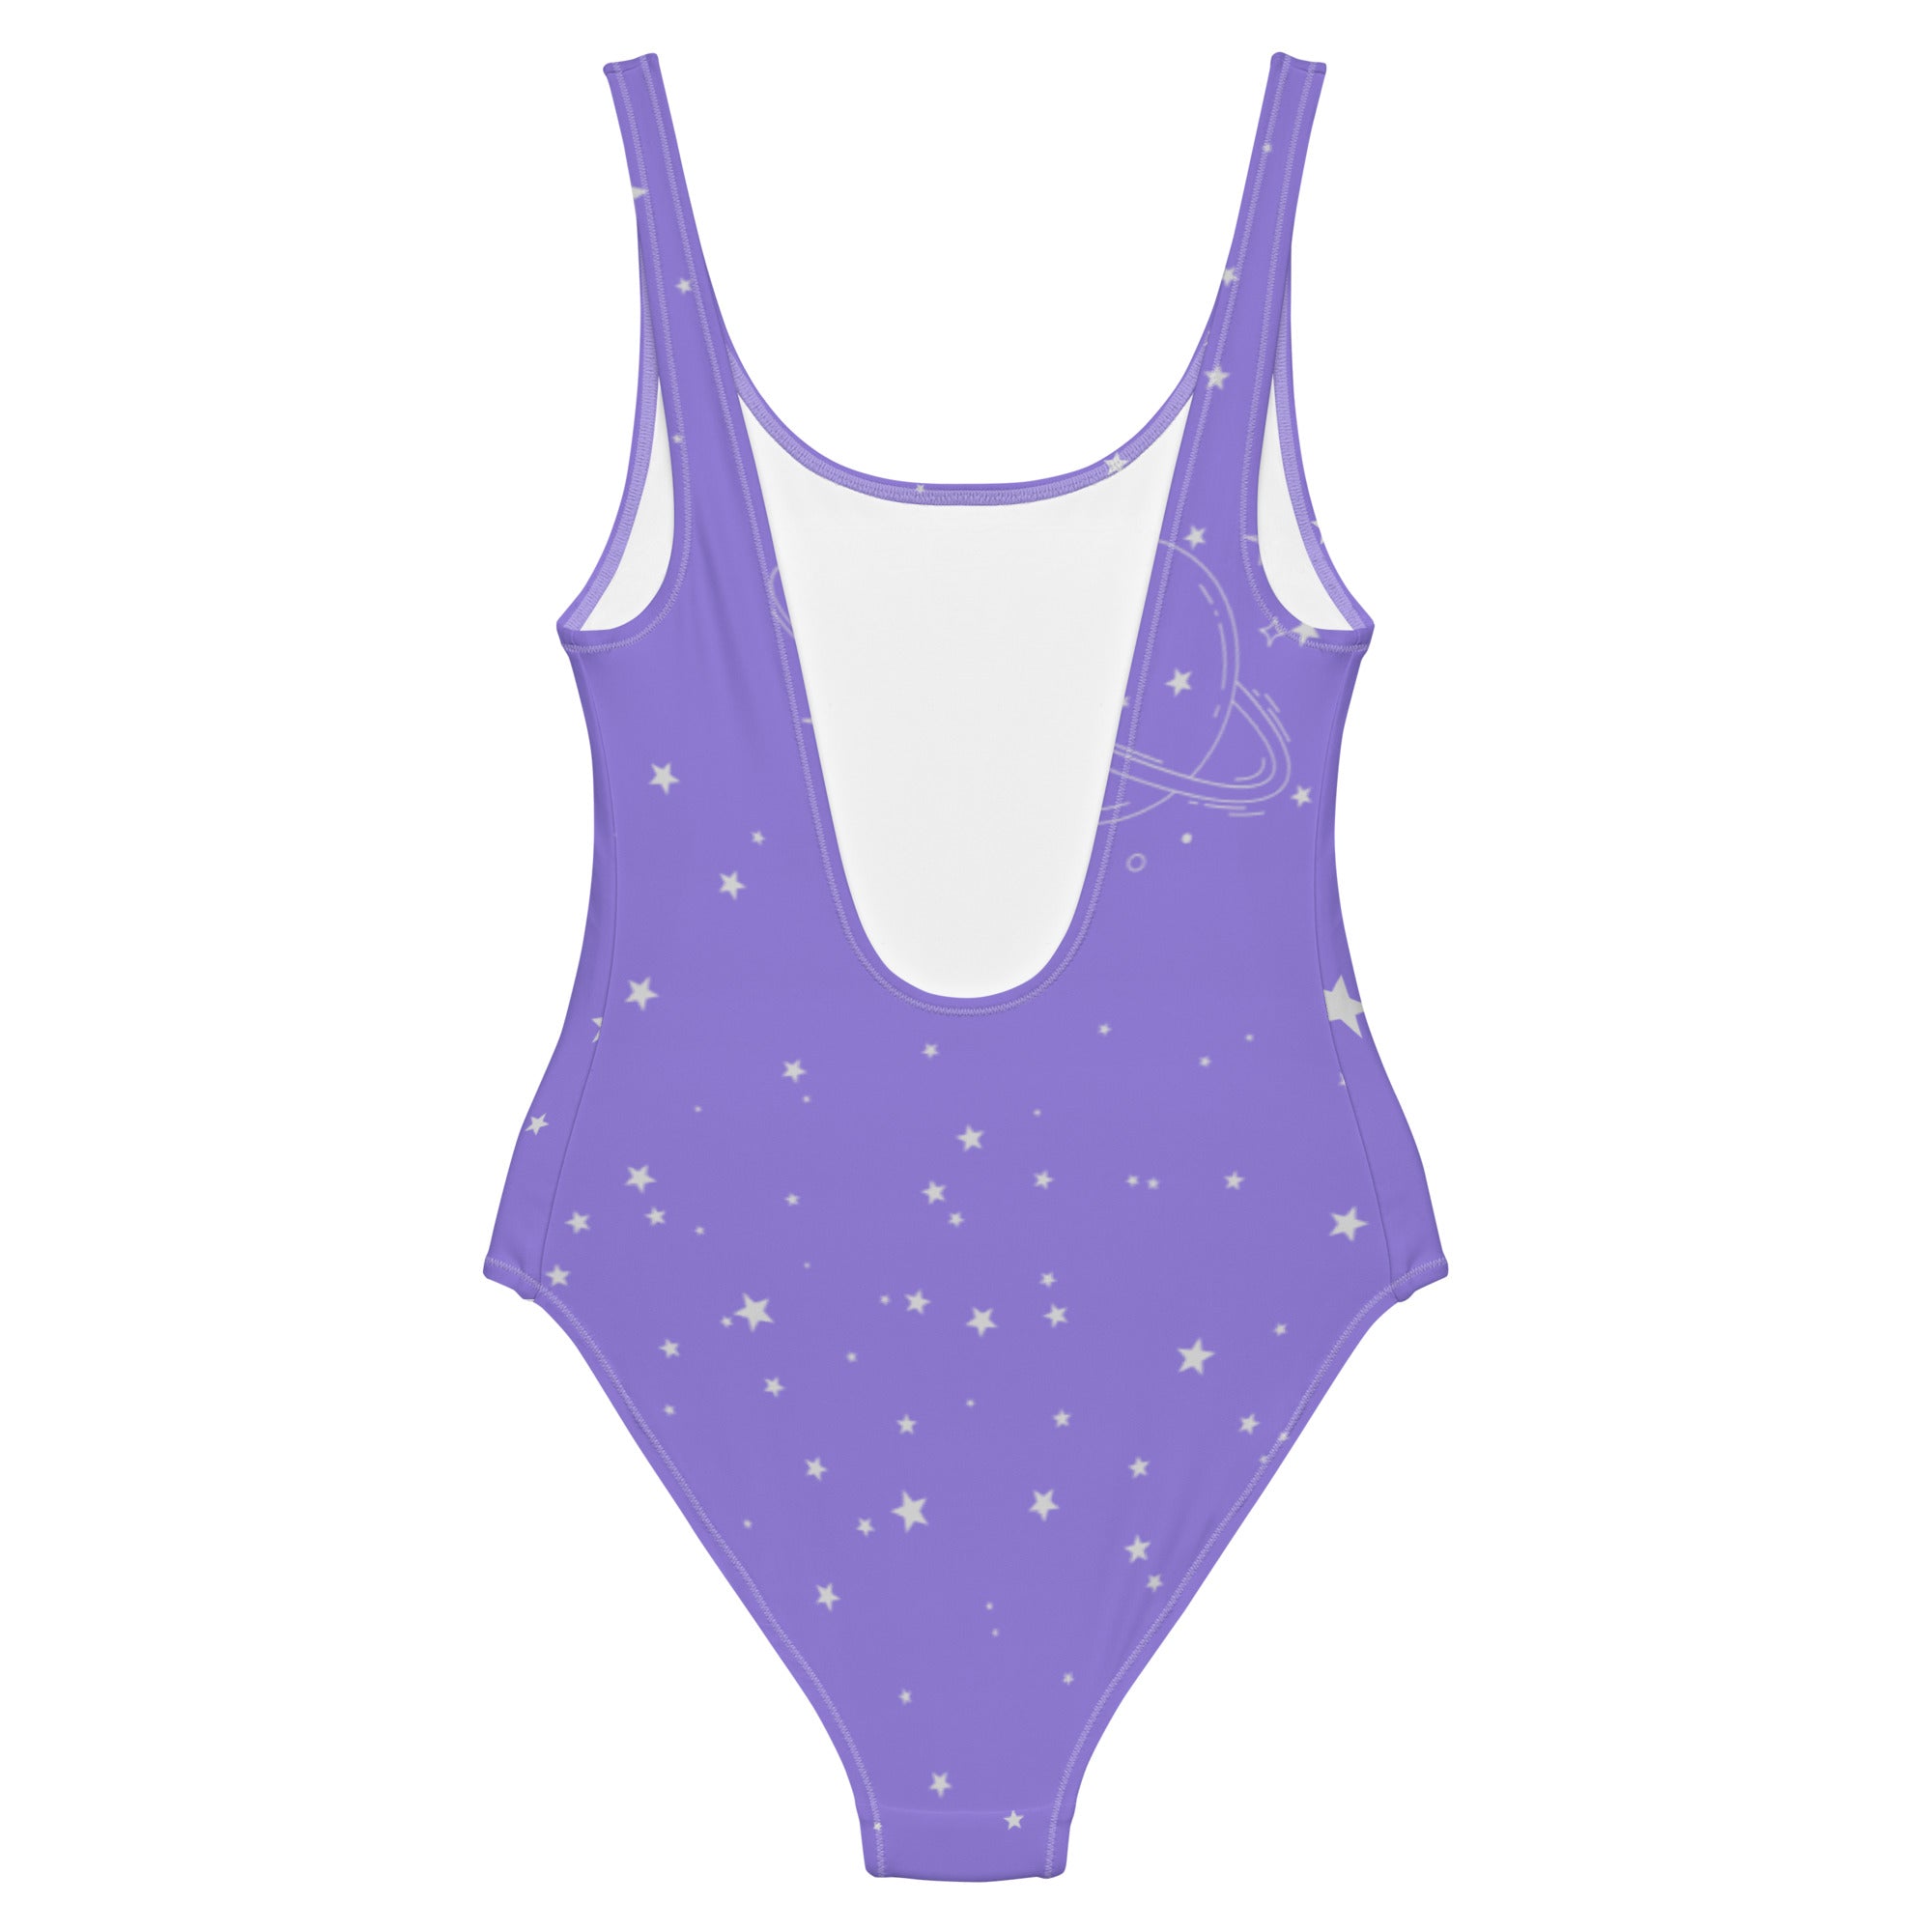 Galaxy print design swimsuit for women